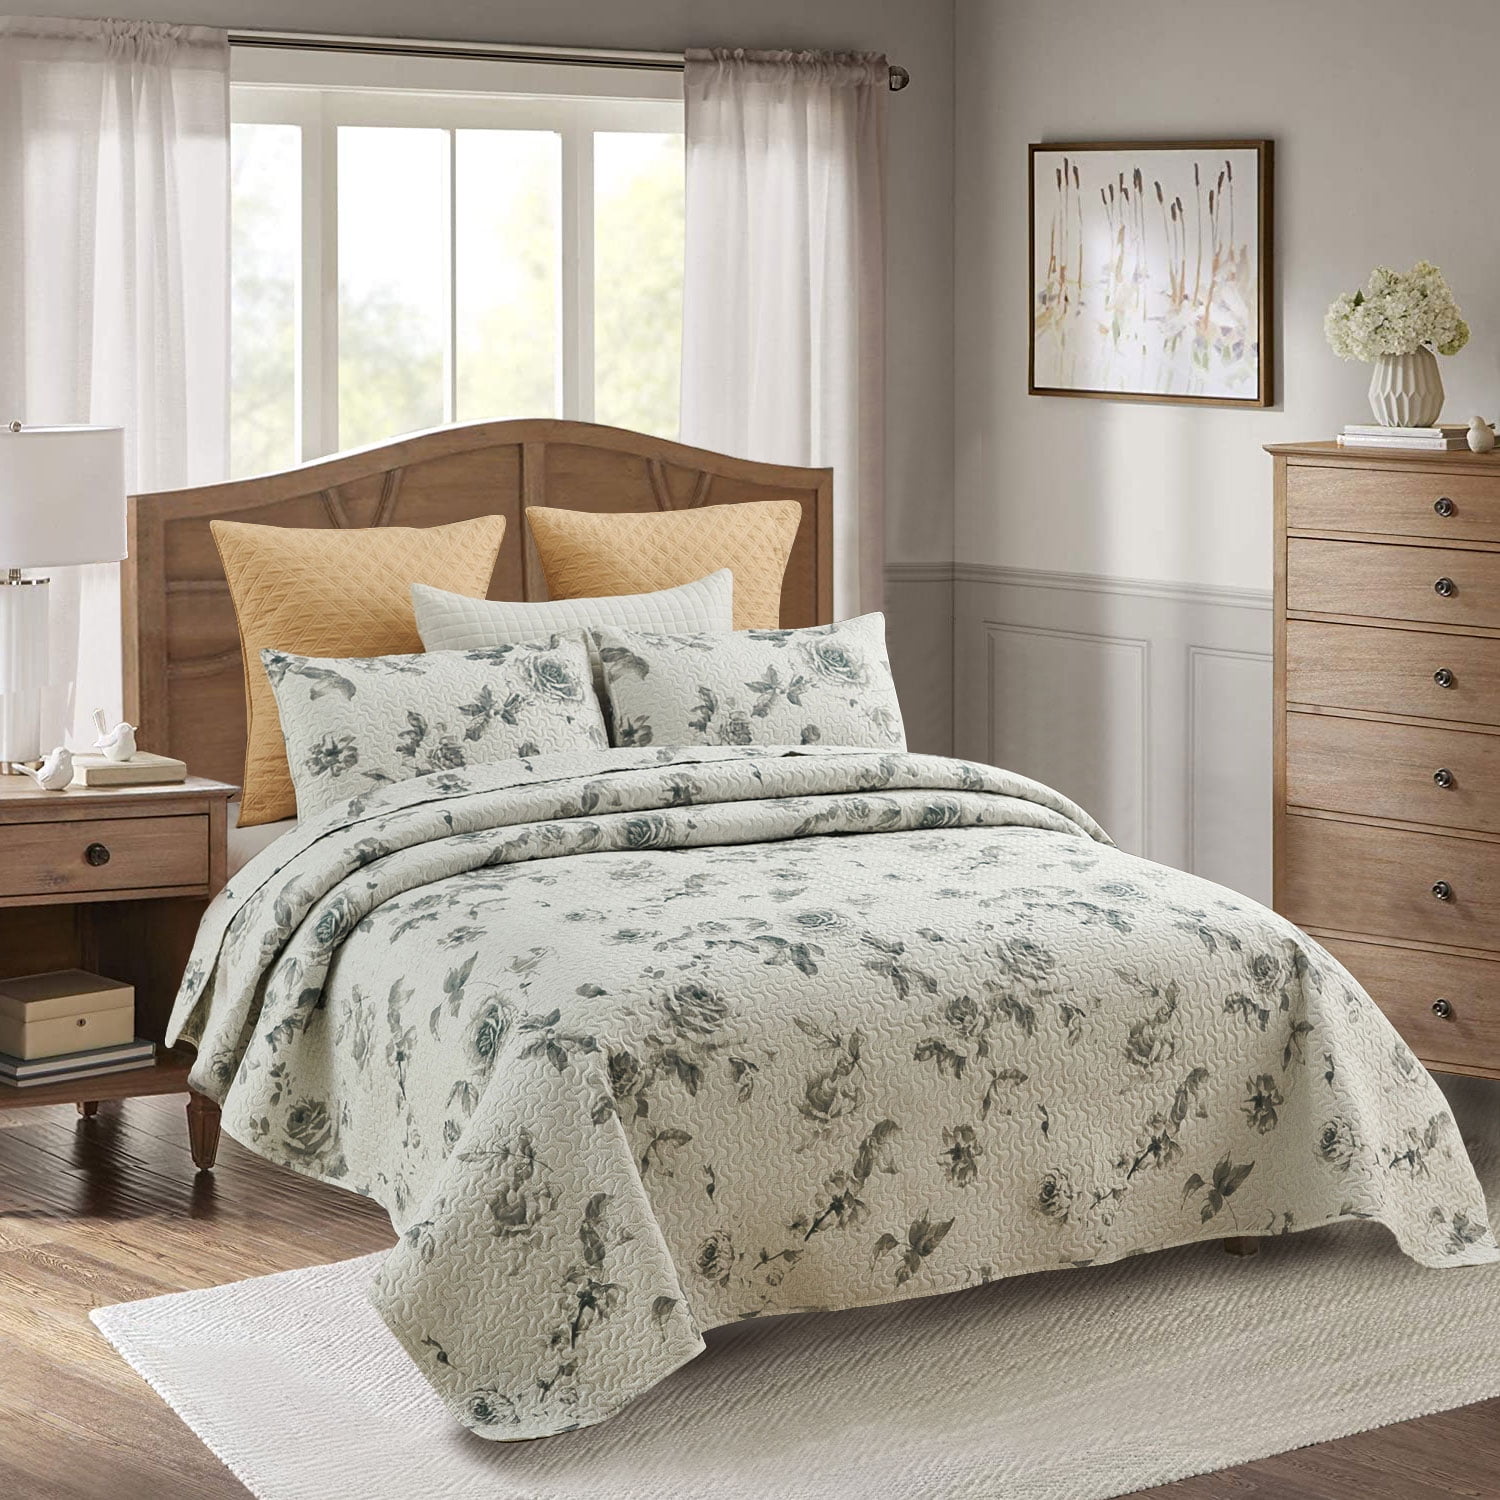 Details about   Soft Quilt Checkered Travel Bedding Newborn Soft Home Convenient Blanket Quilt 